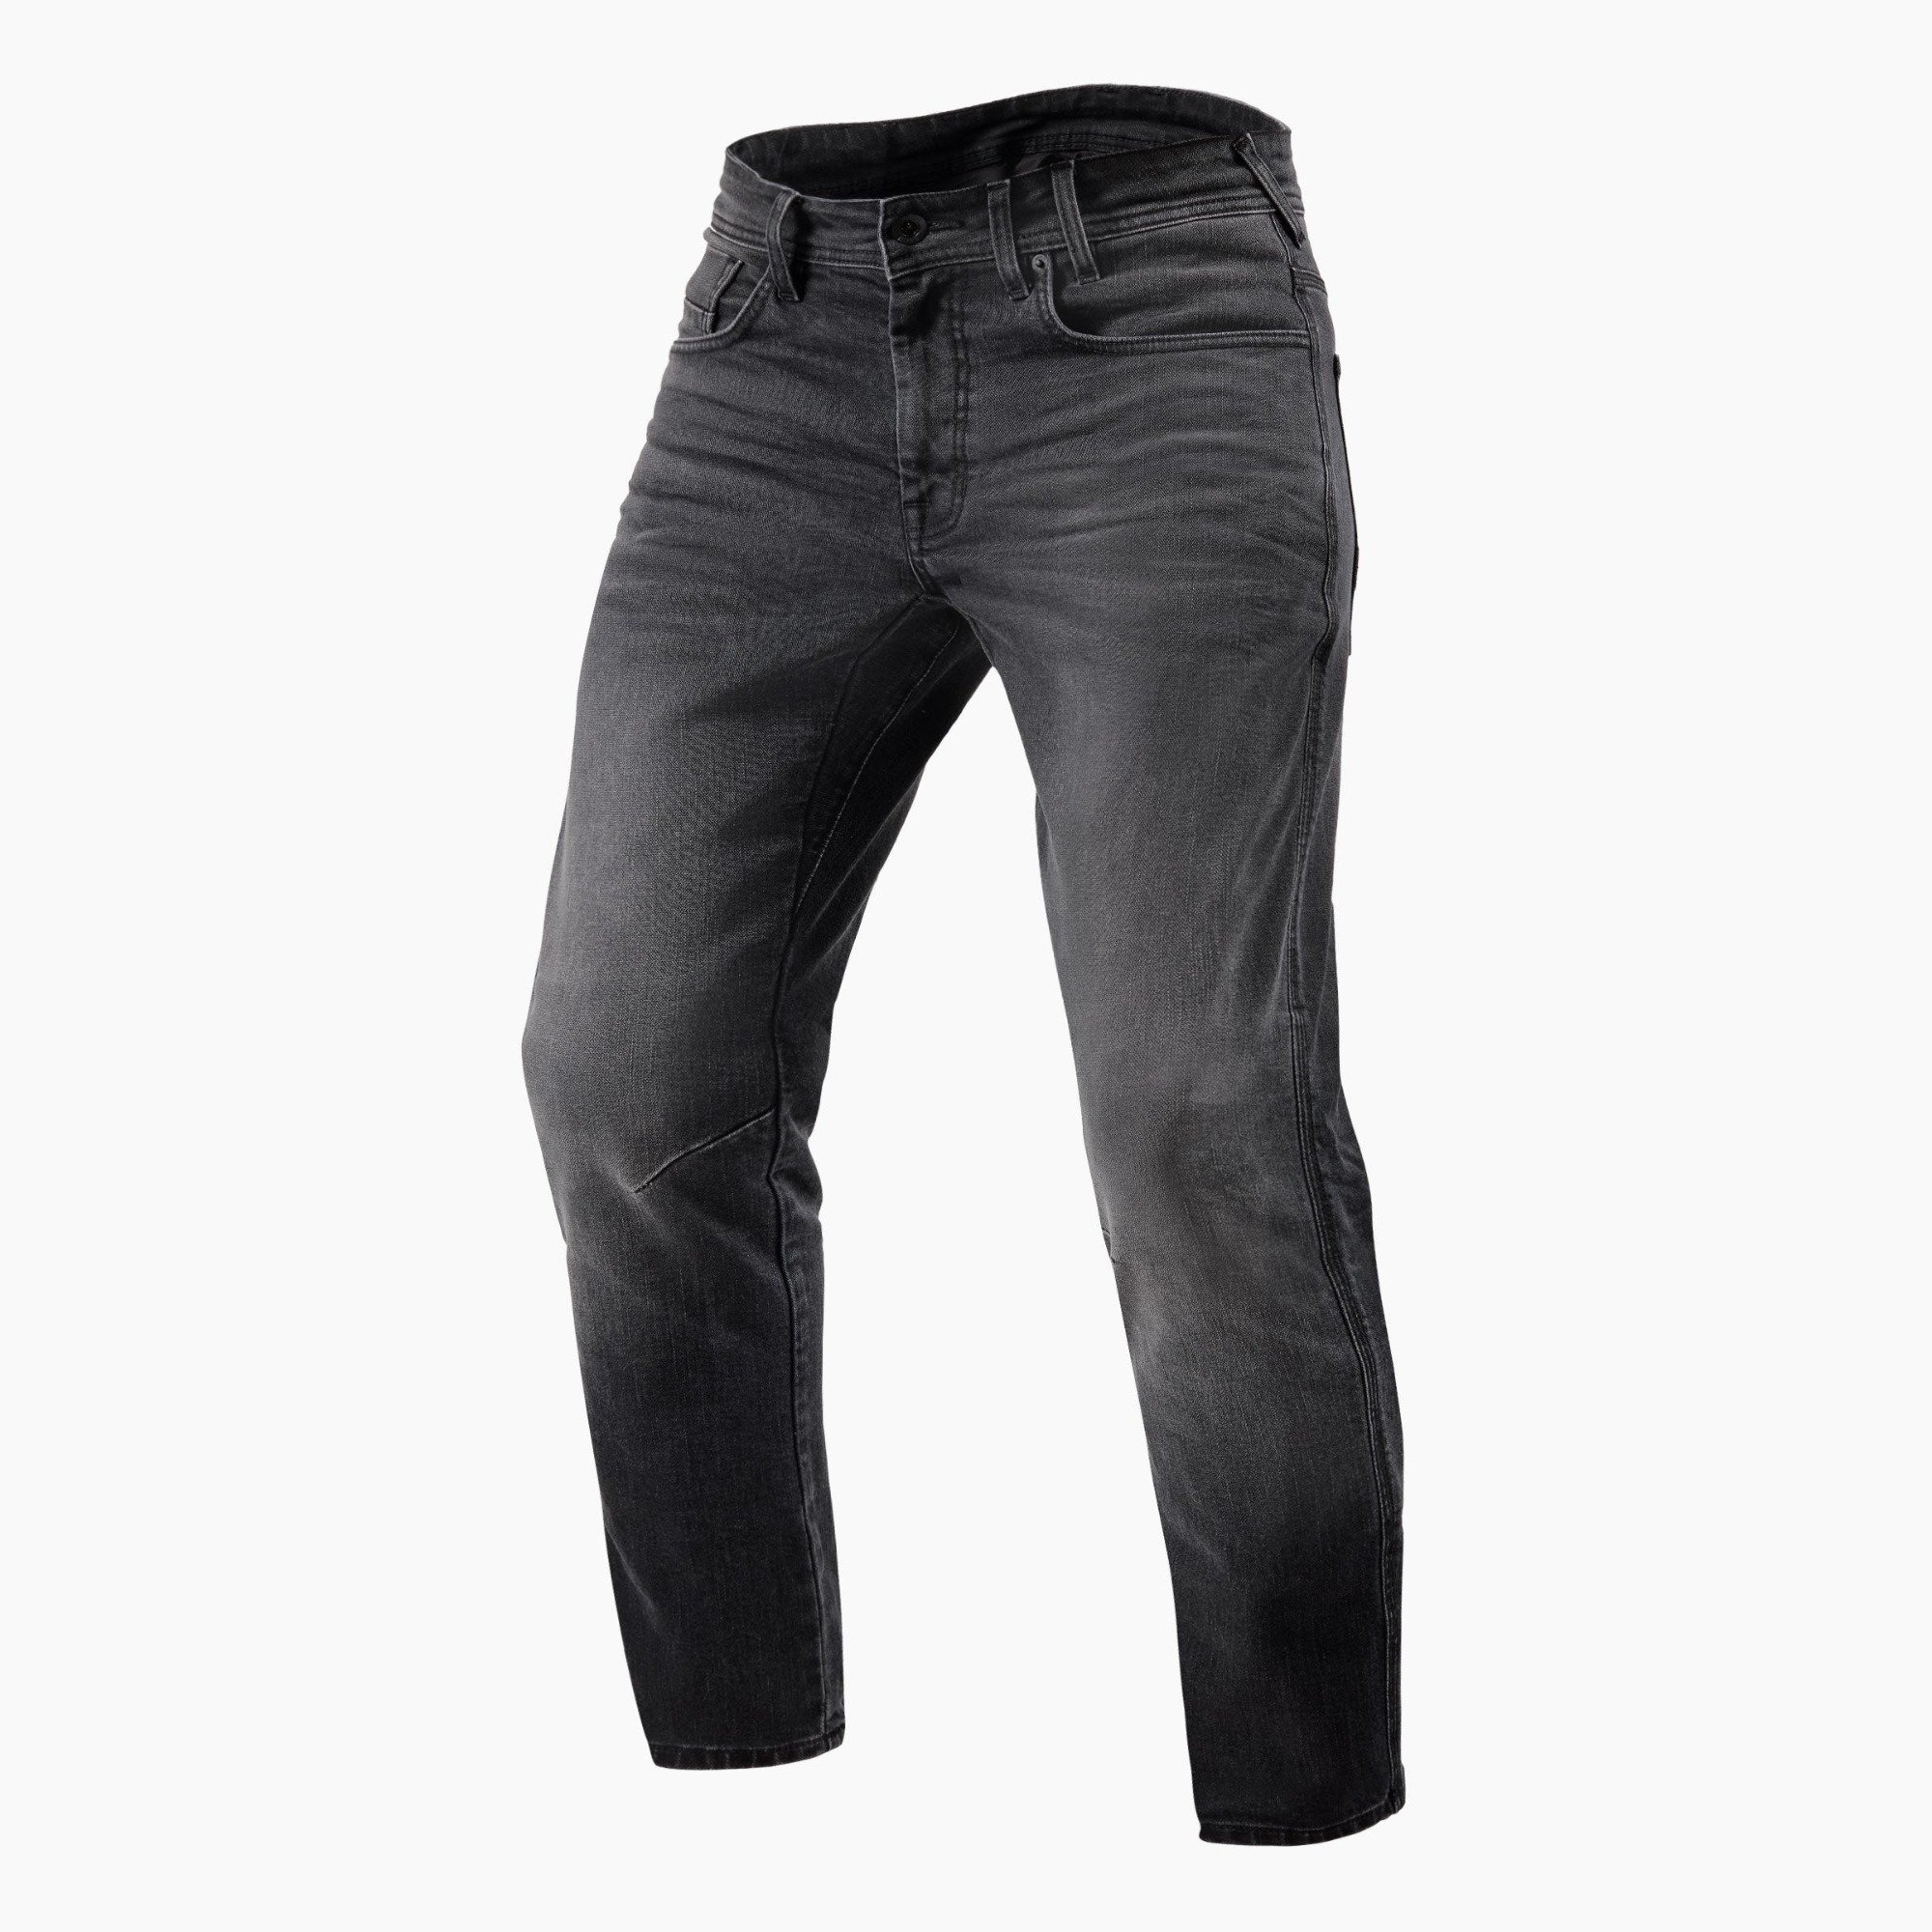 Image of REV'IT! Jeans Detroit 2 TF Mid Grey Used Motorcycle Jeans Size L32/W28 EN